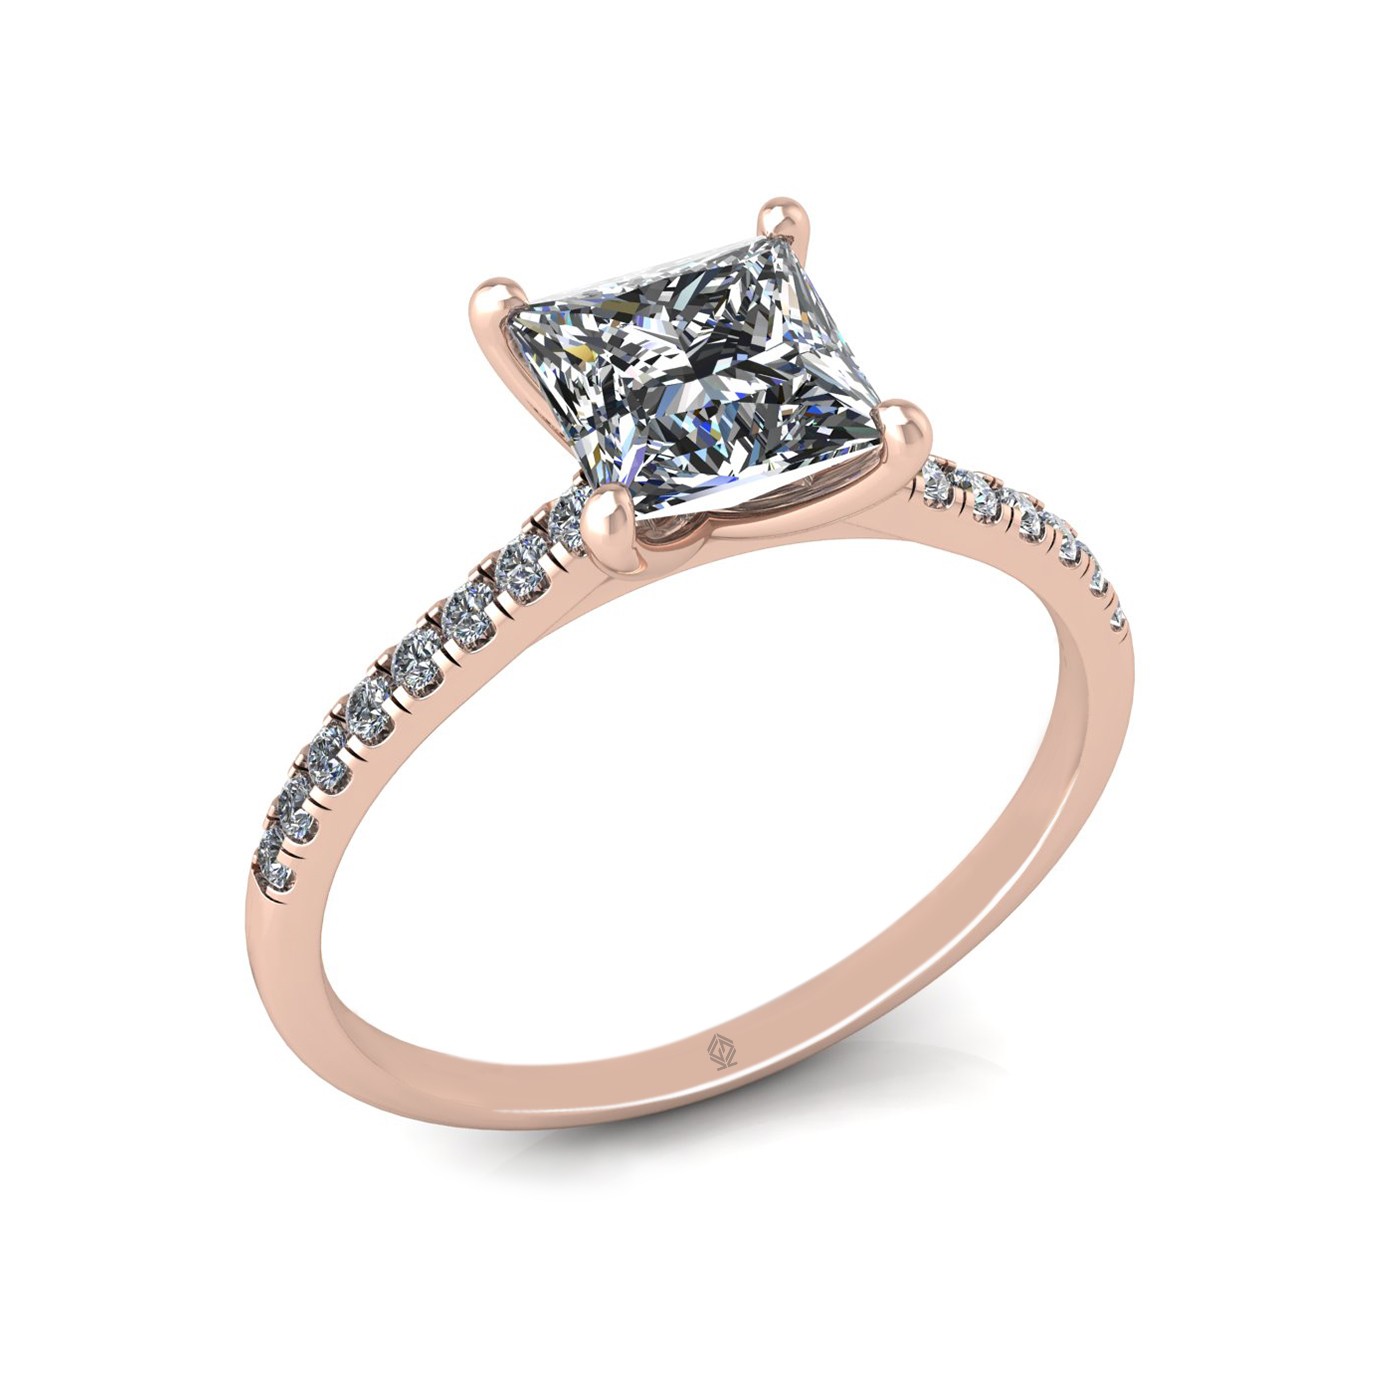 18k rose gold  1,20 ct 4 prongs princess cut diamond engagement ring with whisper thin pavÉ set band